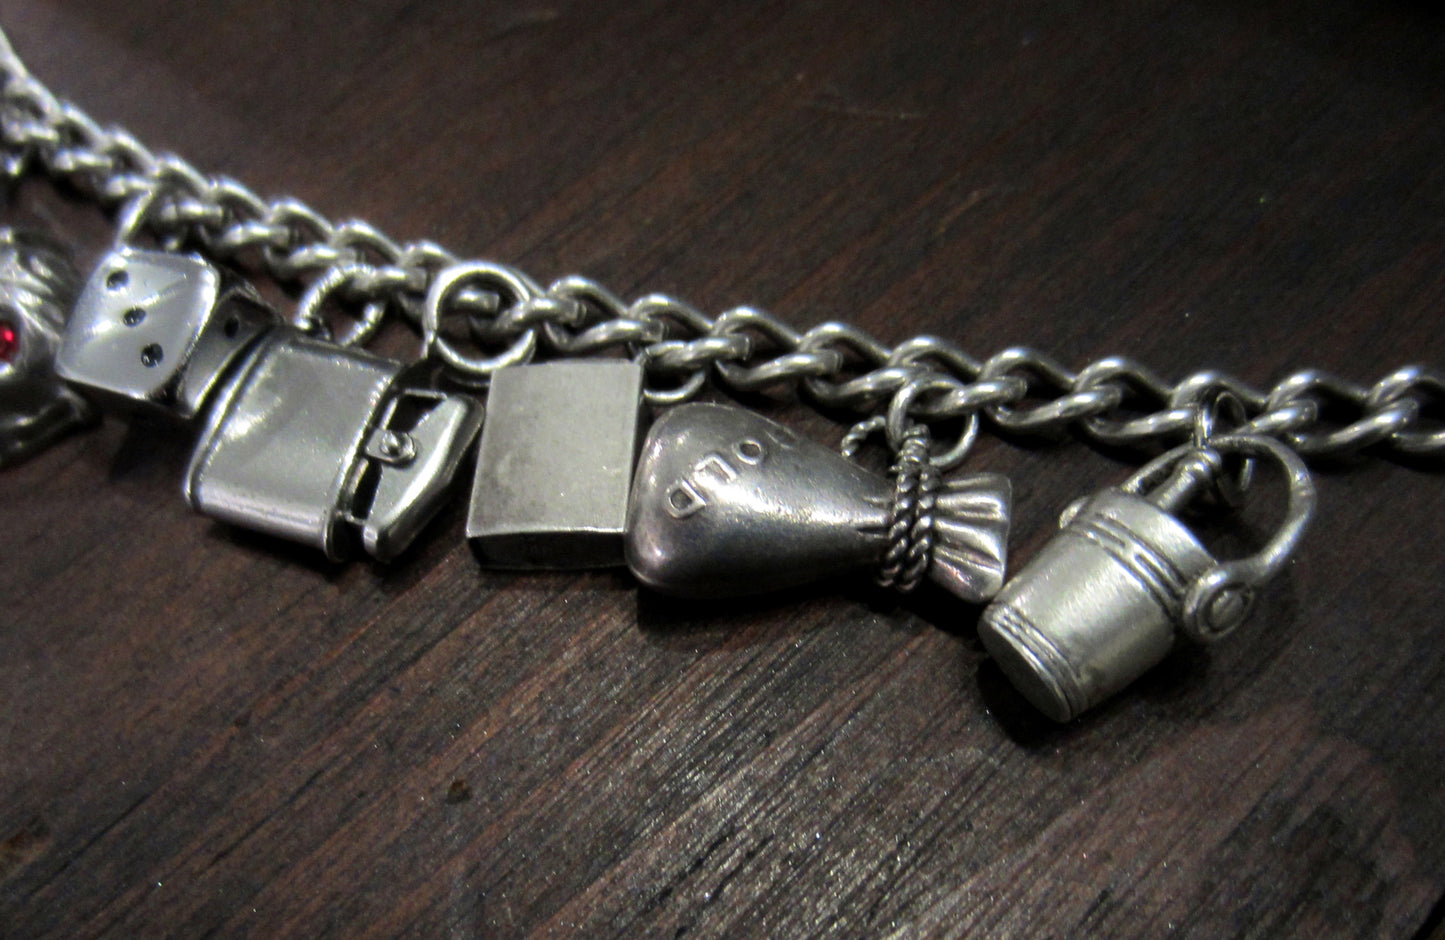 SOLD--Vintage "Vices" Charm Bracelet in Sterling Silver, c. 1920-1950